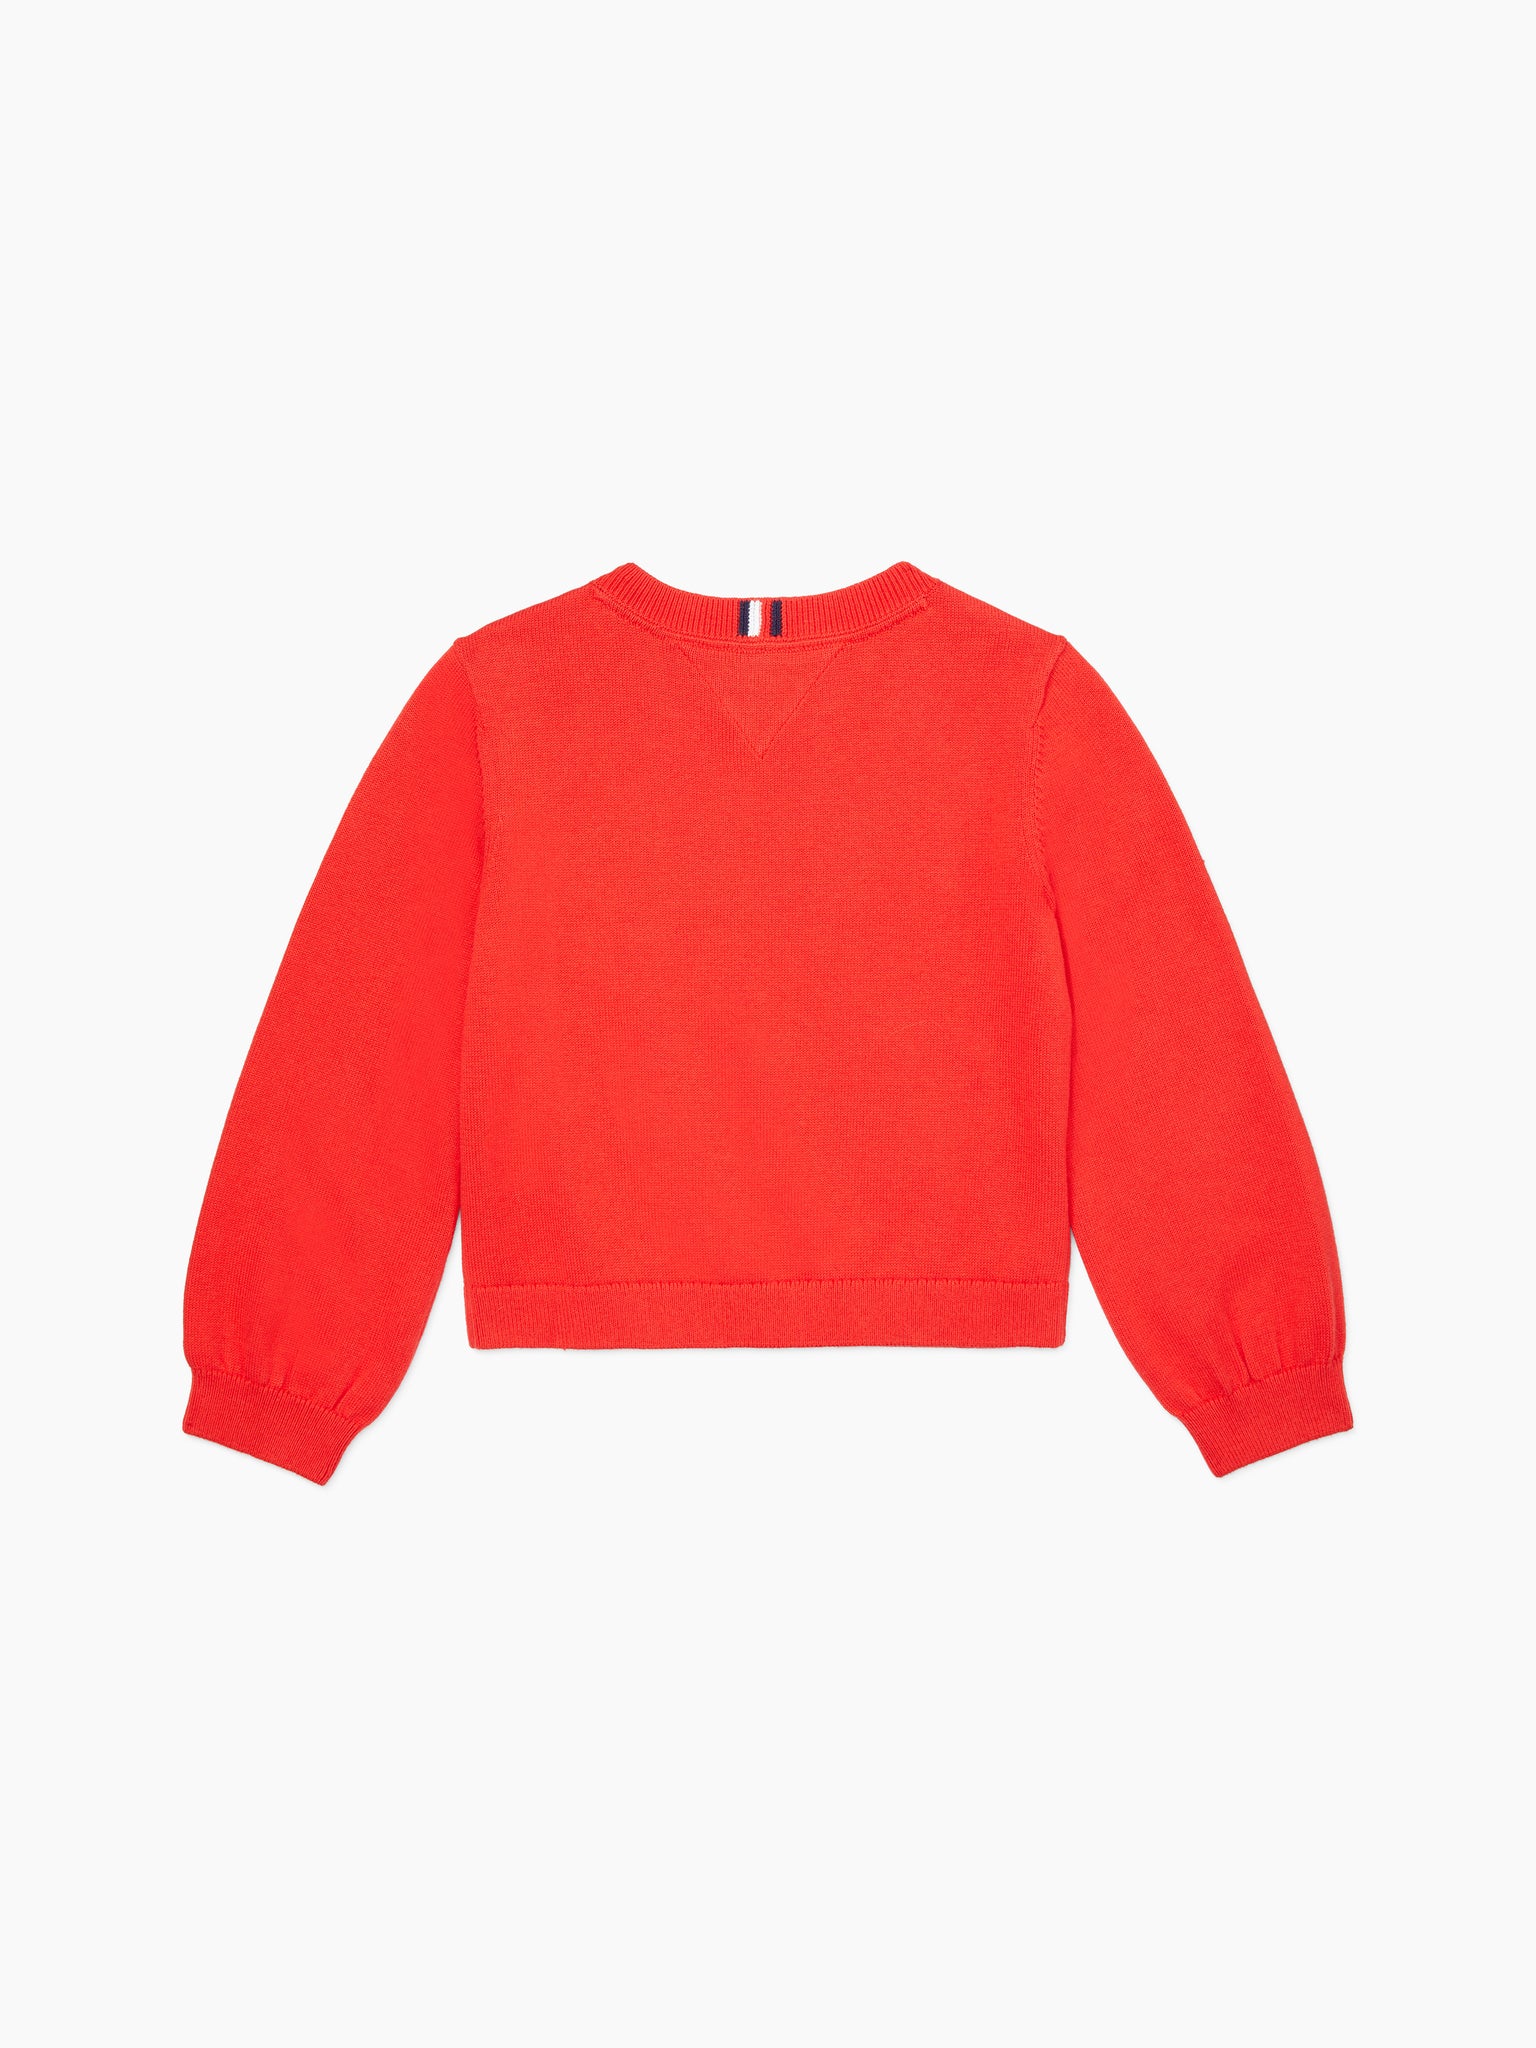 Varsity Sweater (Kids) - Red